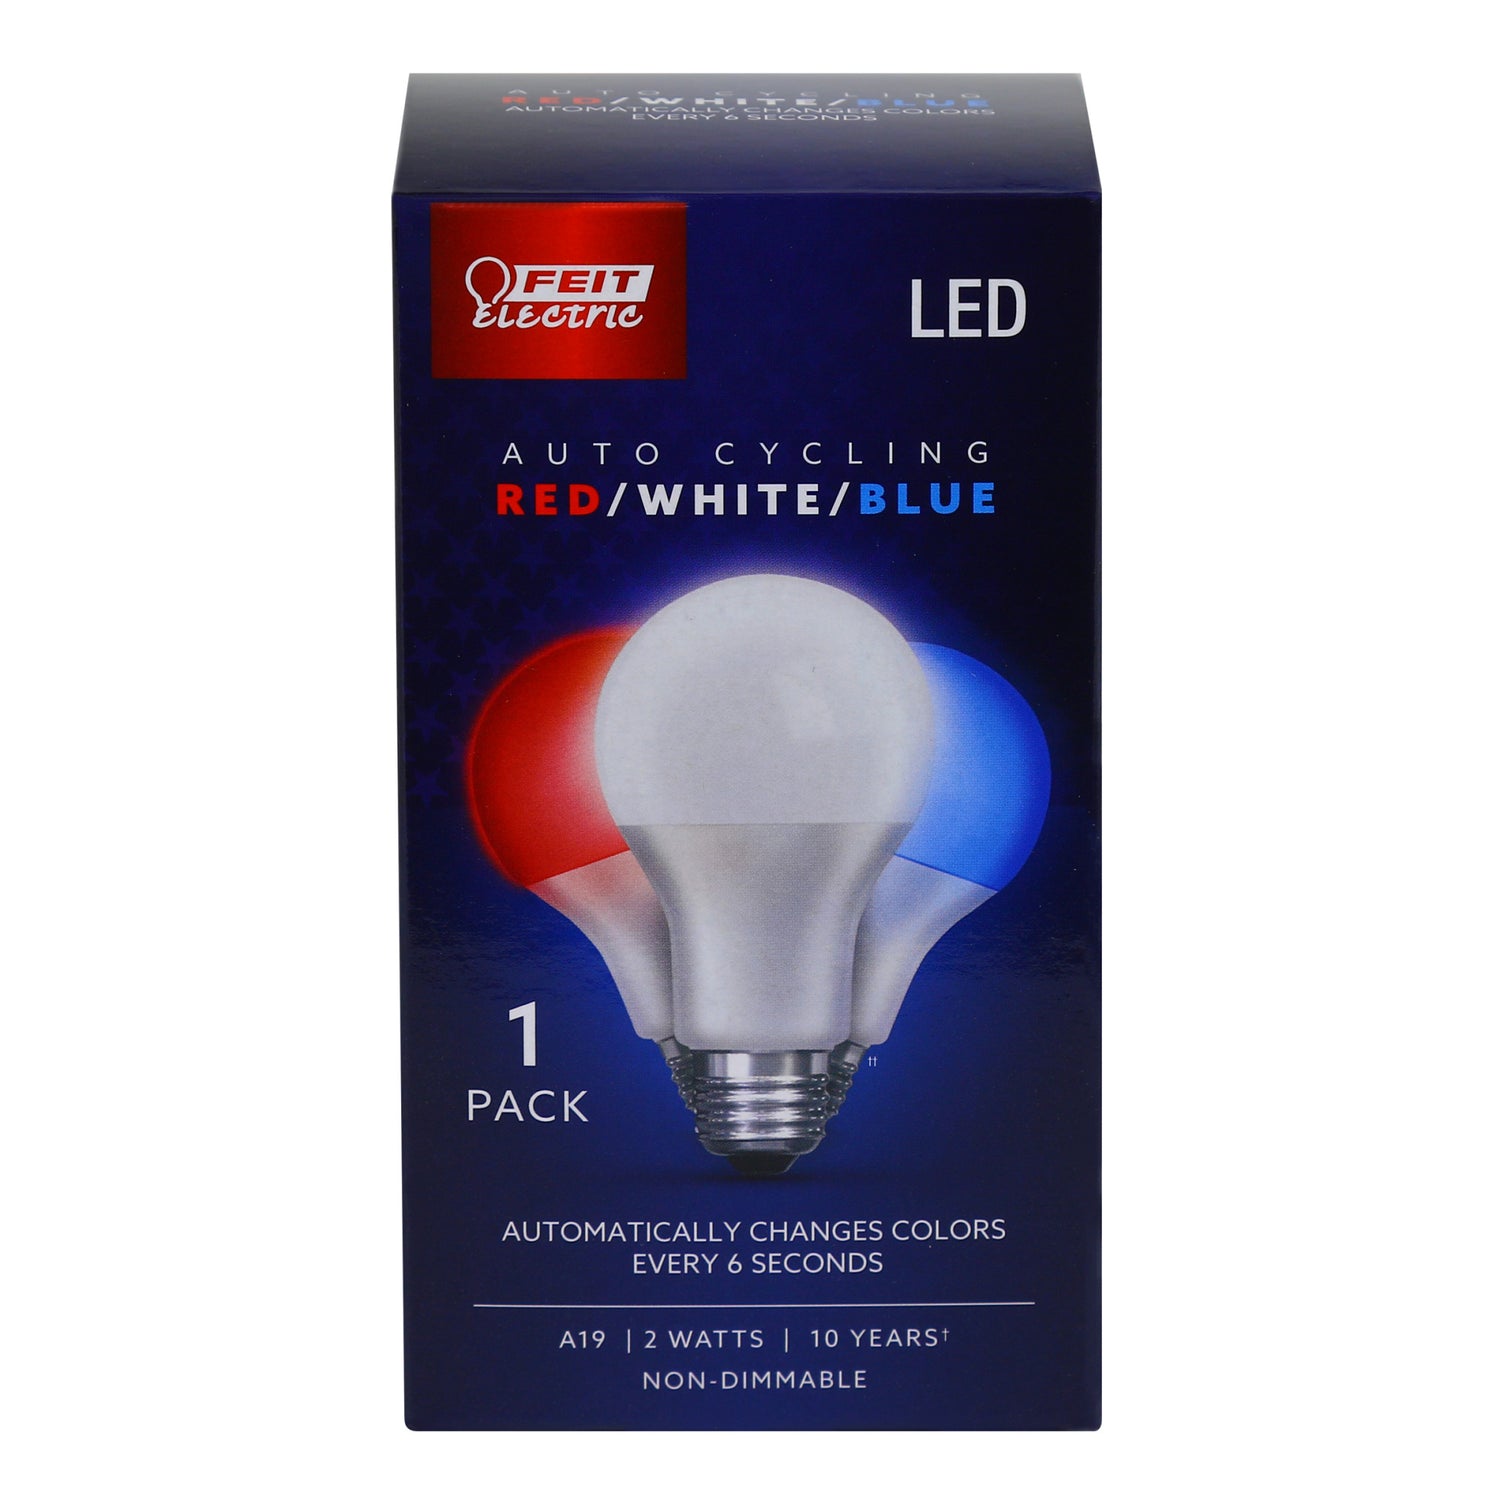 2W RWB A19 E26 Base (Medium) LED Auto Cycling Red/White/Blue Color Changing Light Bulb